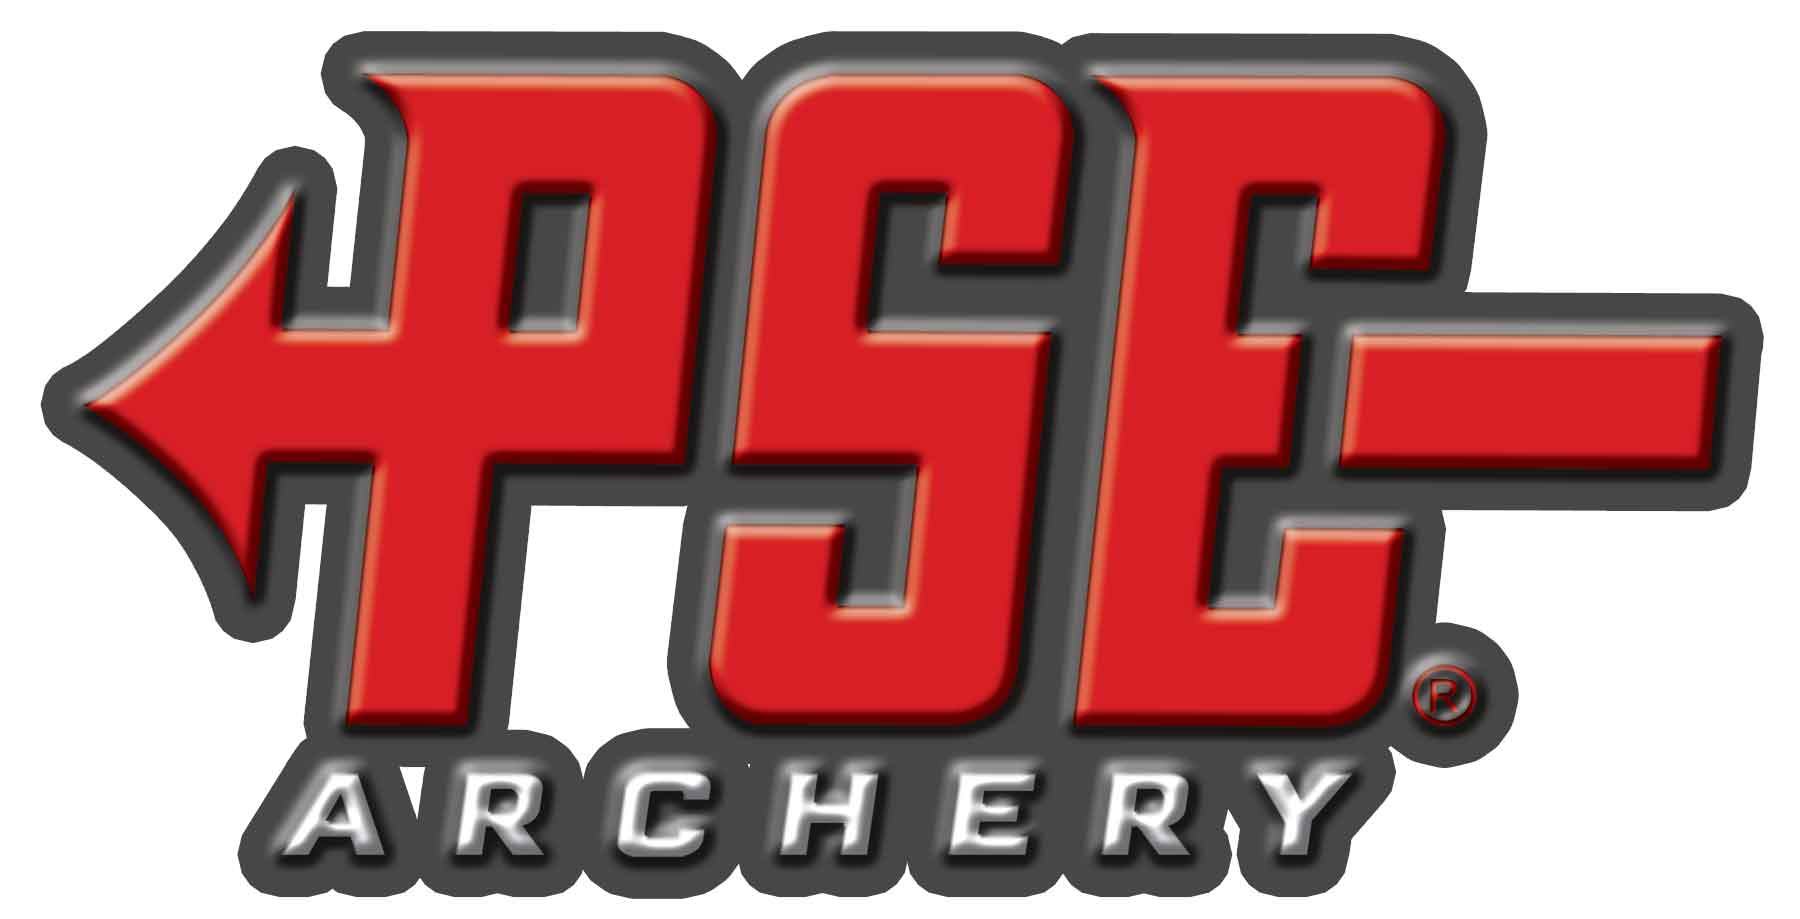 PSE Logo - Pse Logos